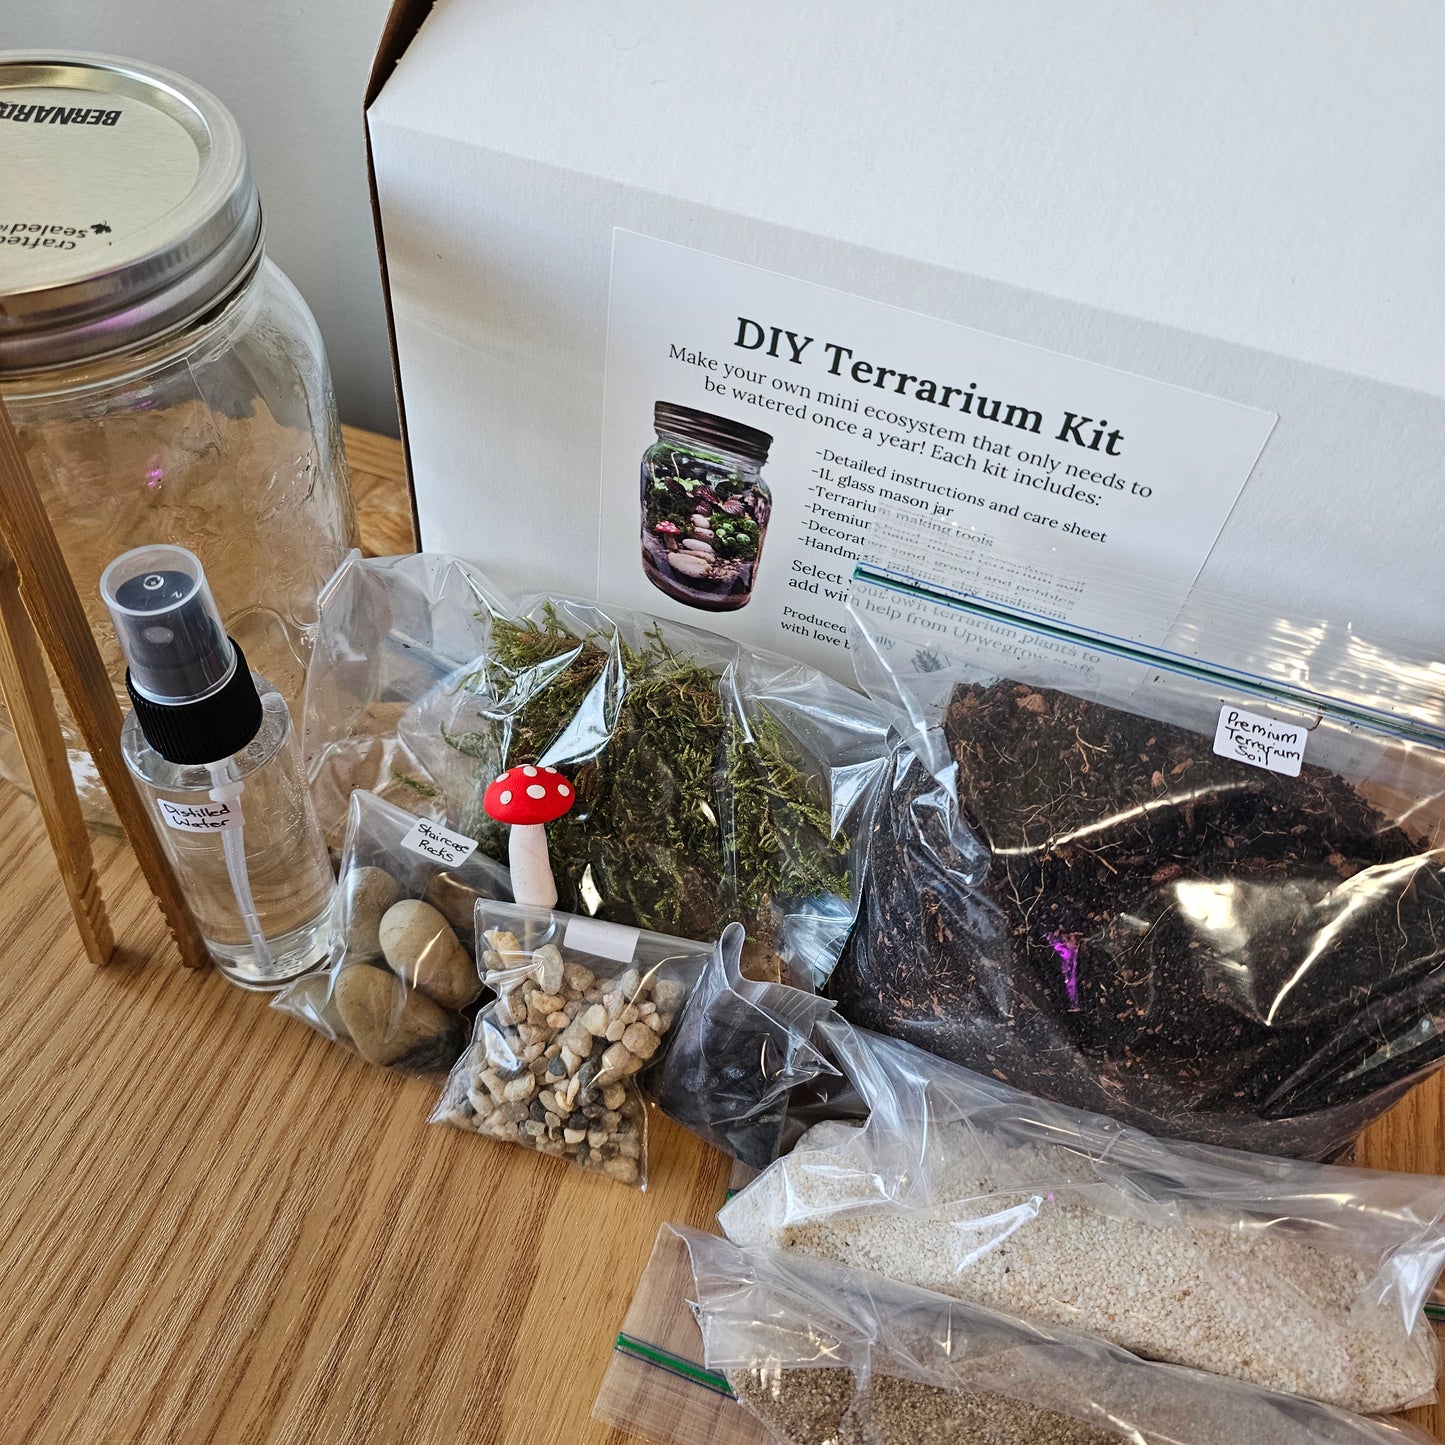 DIY Terrarium Kits: Beginner and Family-Friendly Activity